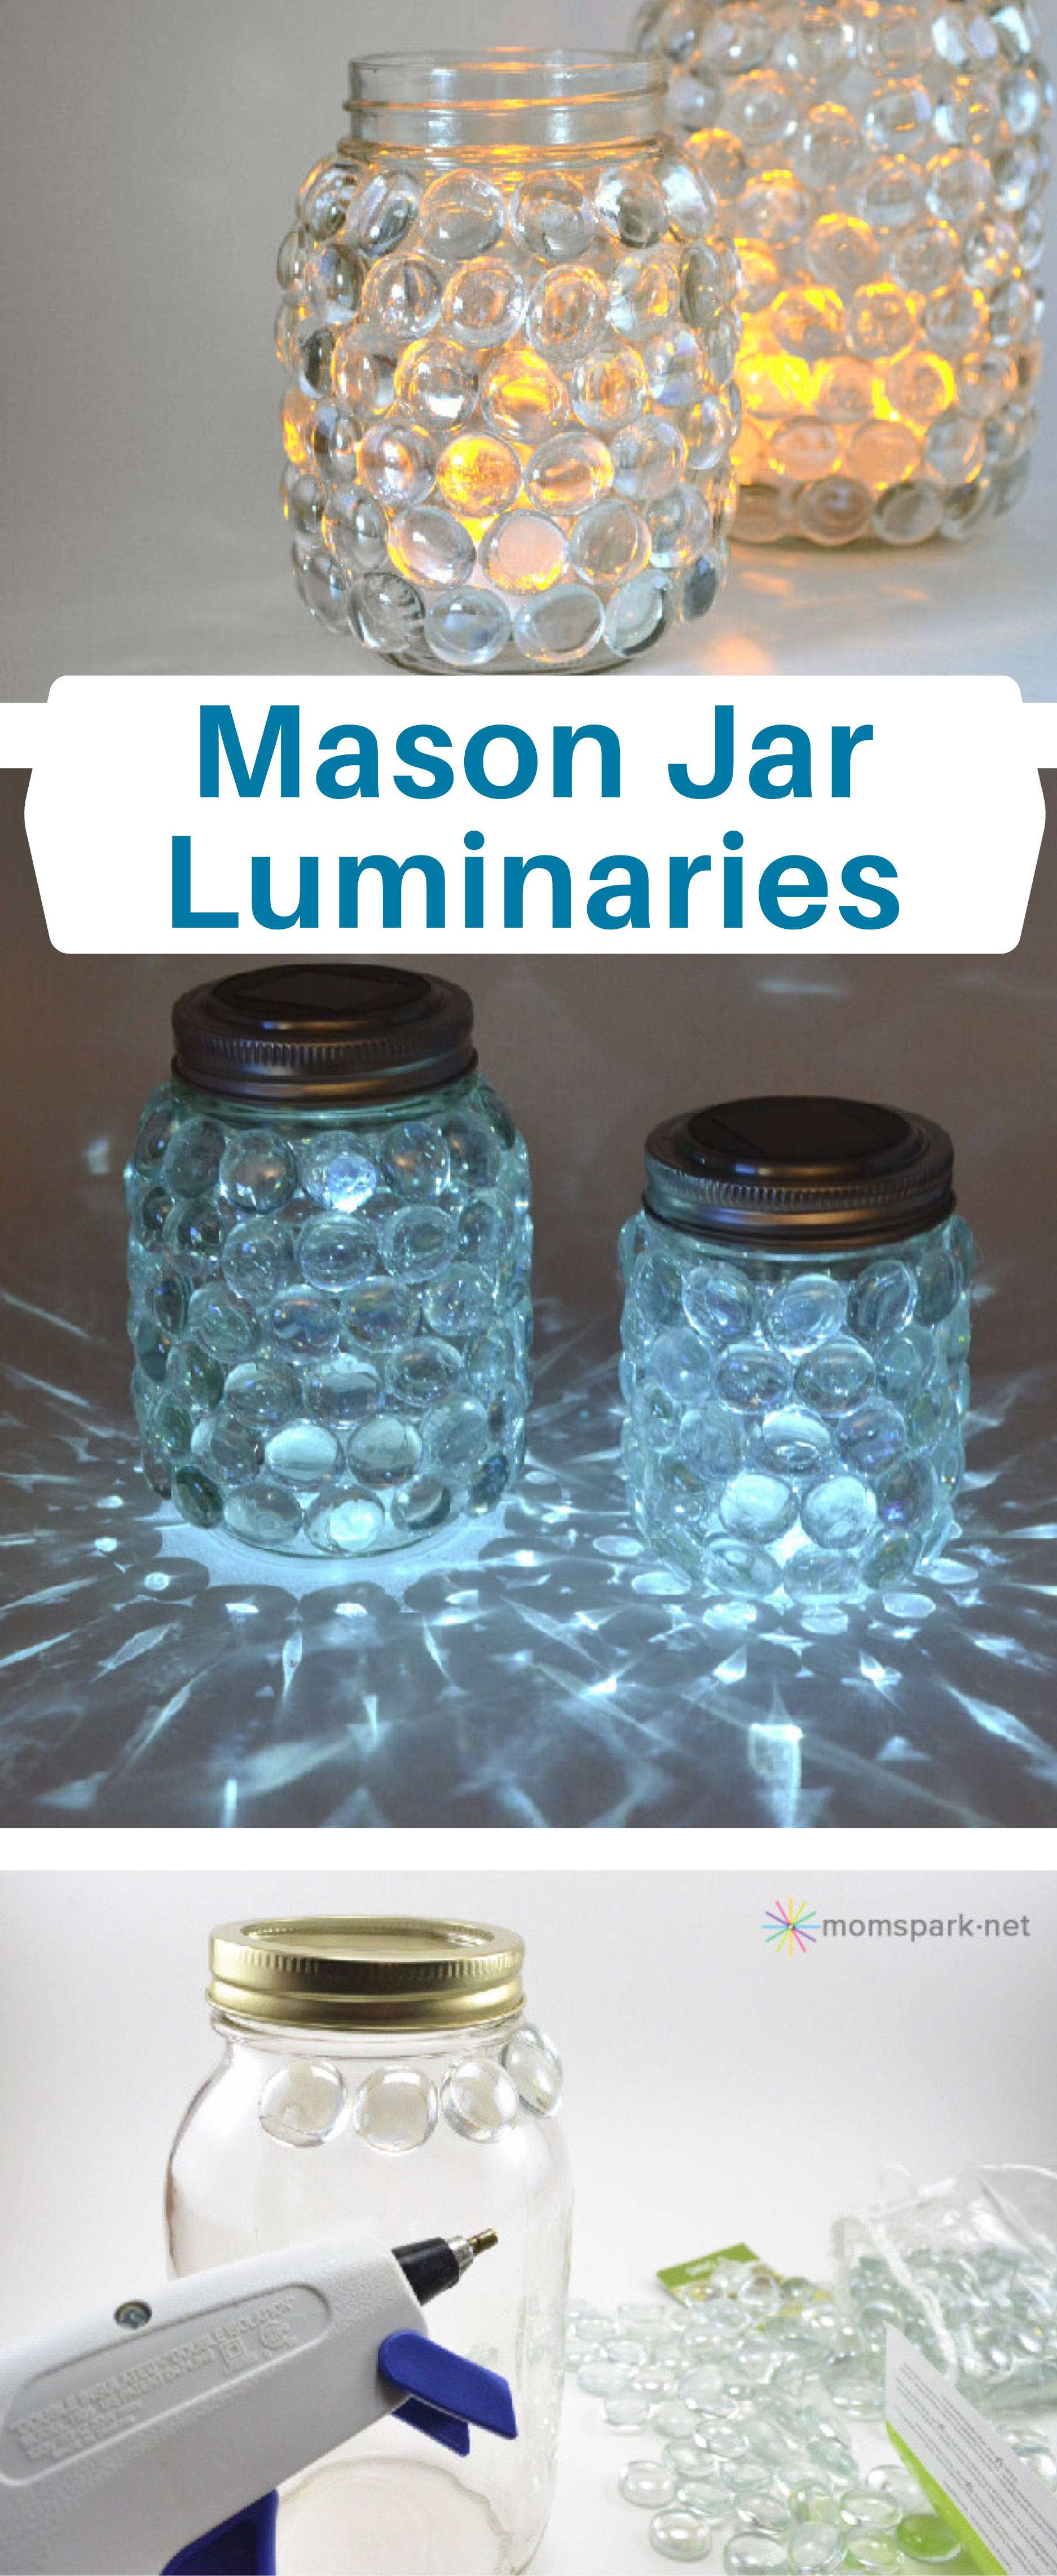 Best ideas about Mason Jar Craft Ideas
. Save or Pin 21 Easy Mason Jar Craft Ideas Homelovr Now.